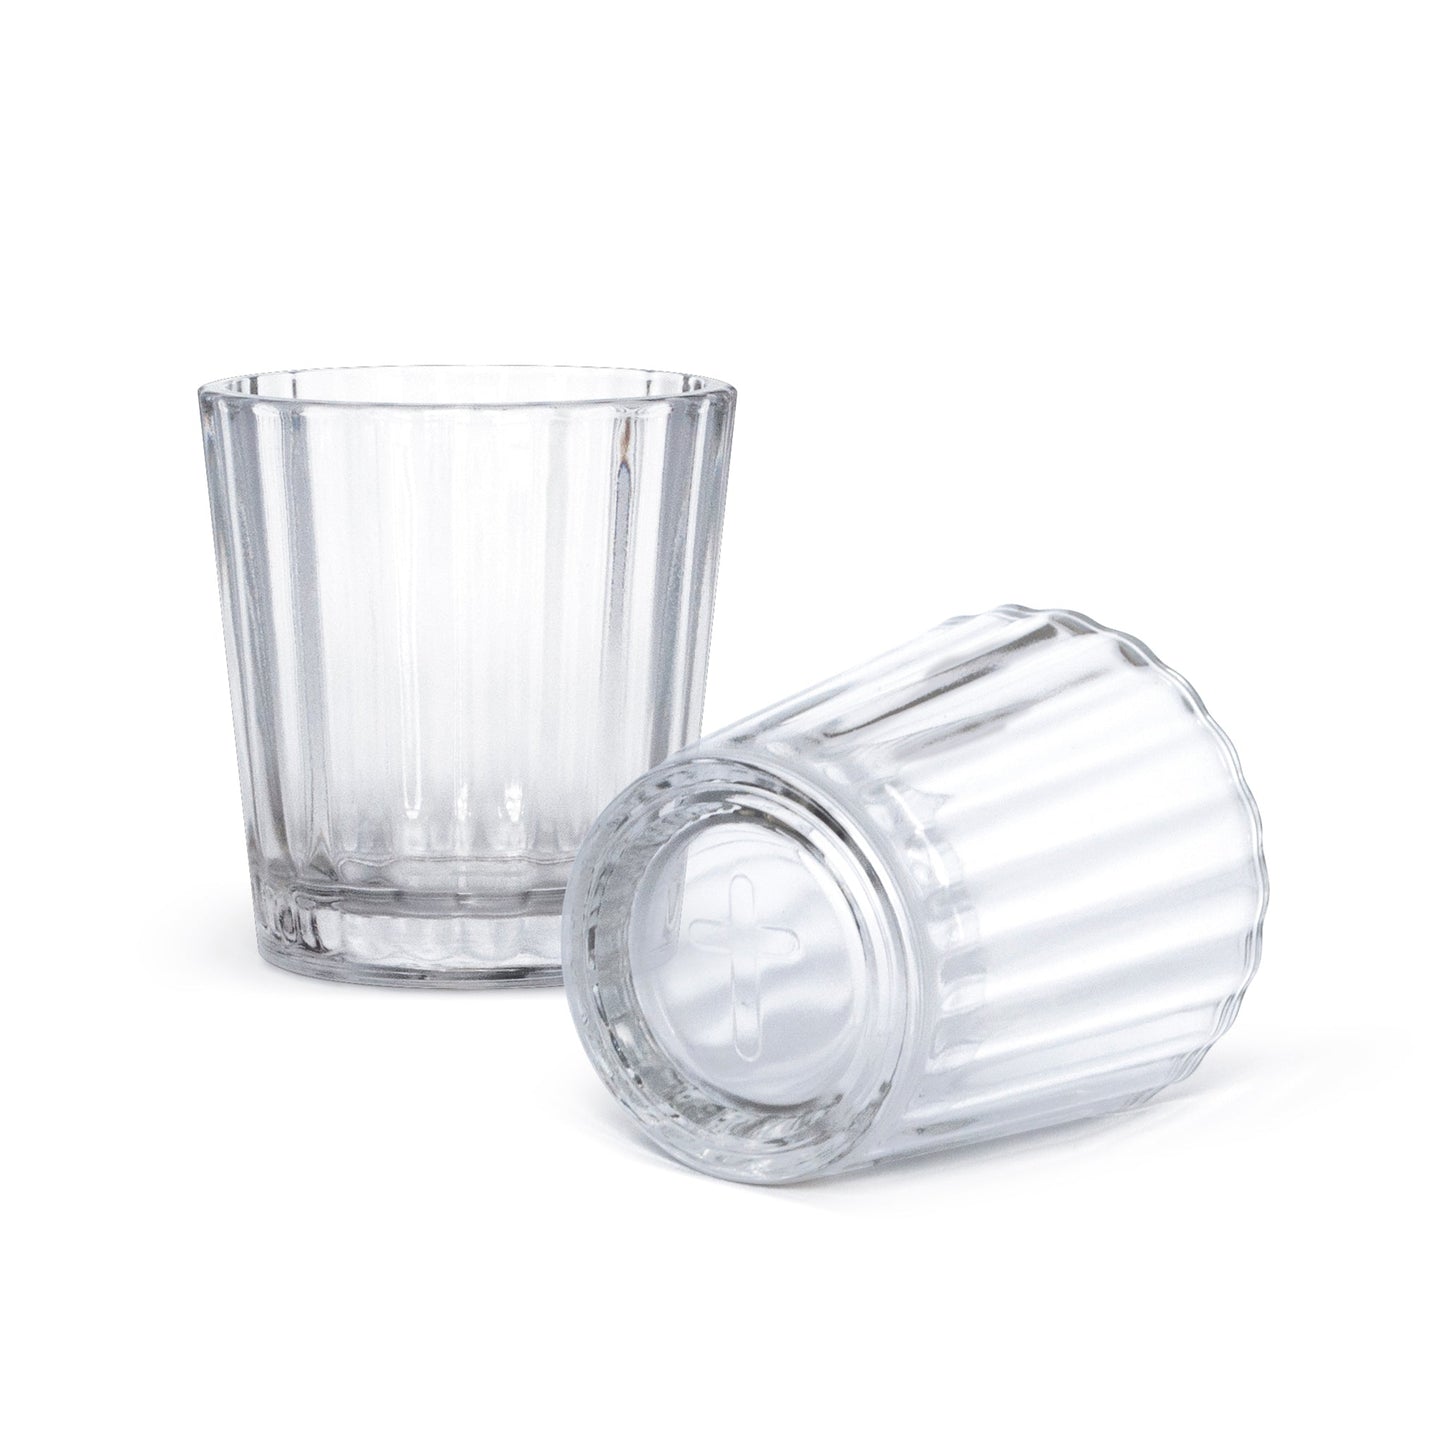 VELADORA MEZCAL GLASS / 2.7oz (80ml) / CASE OF 24